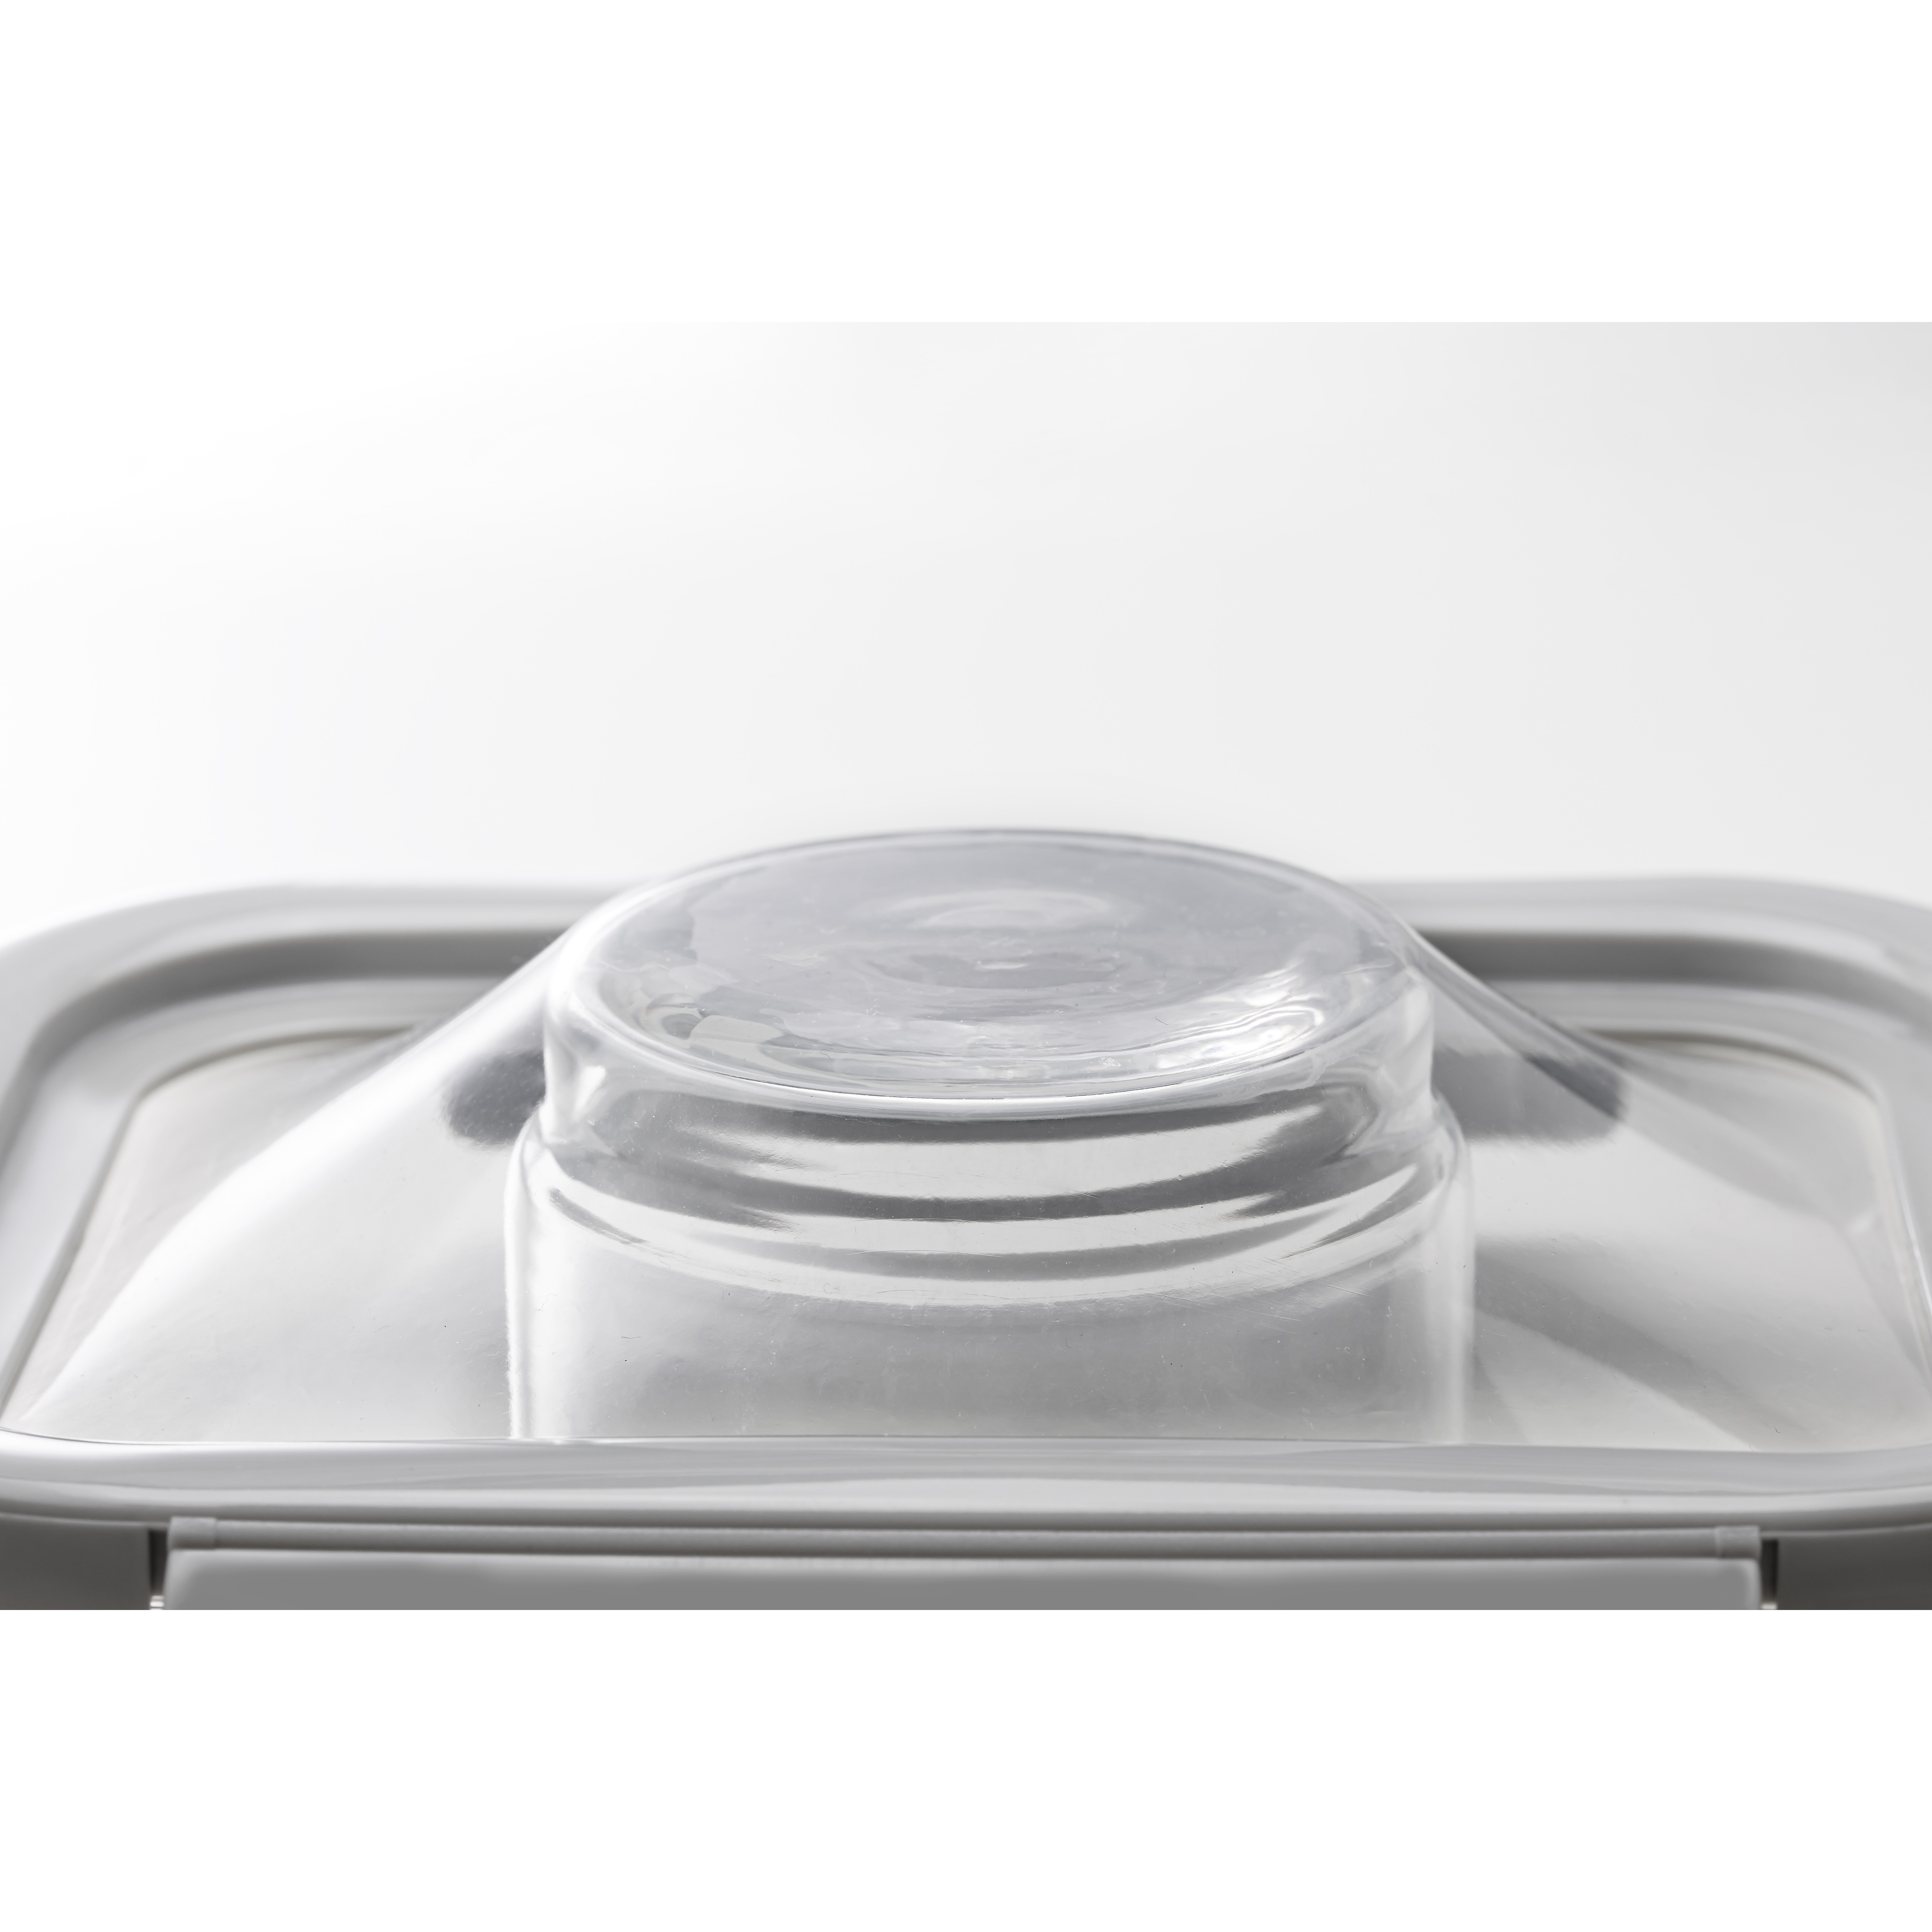 nikii】耐熱ガラス保存容器(シリコン蓋)2個セット | Giftpad egift